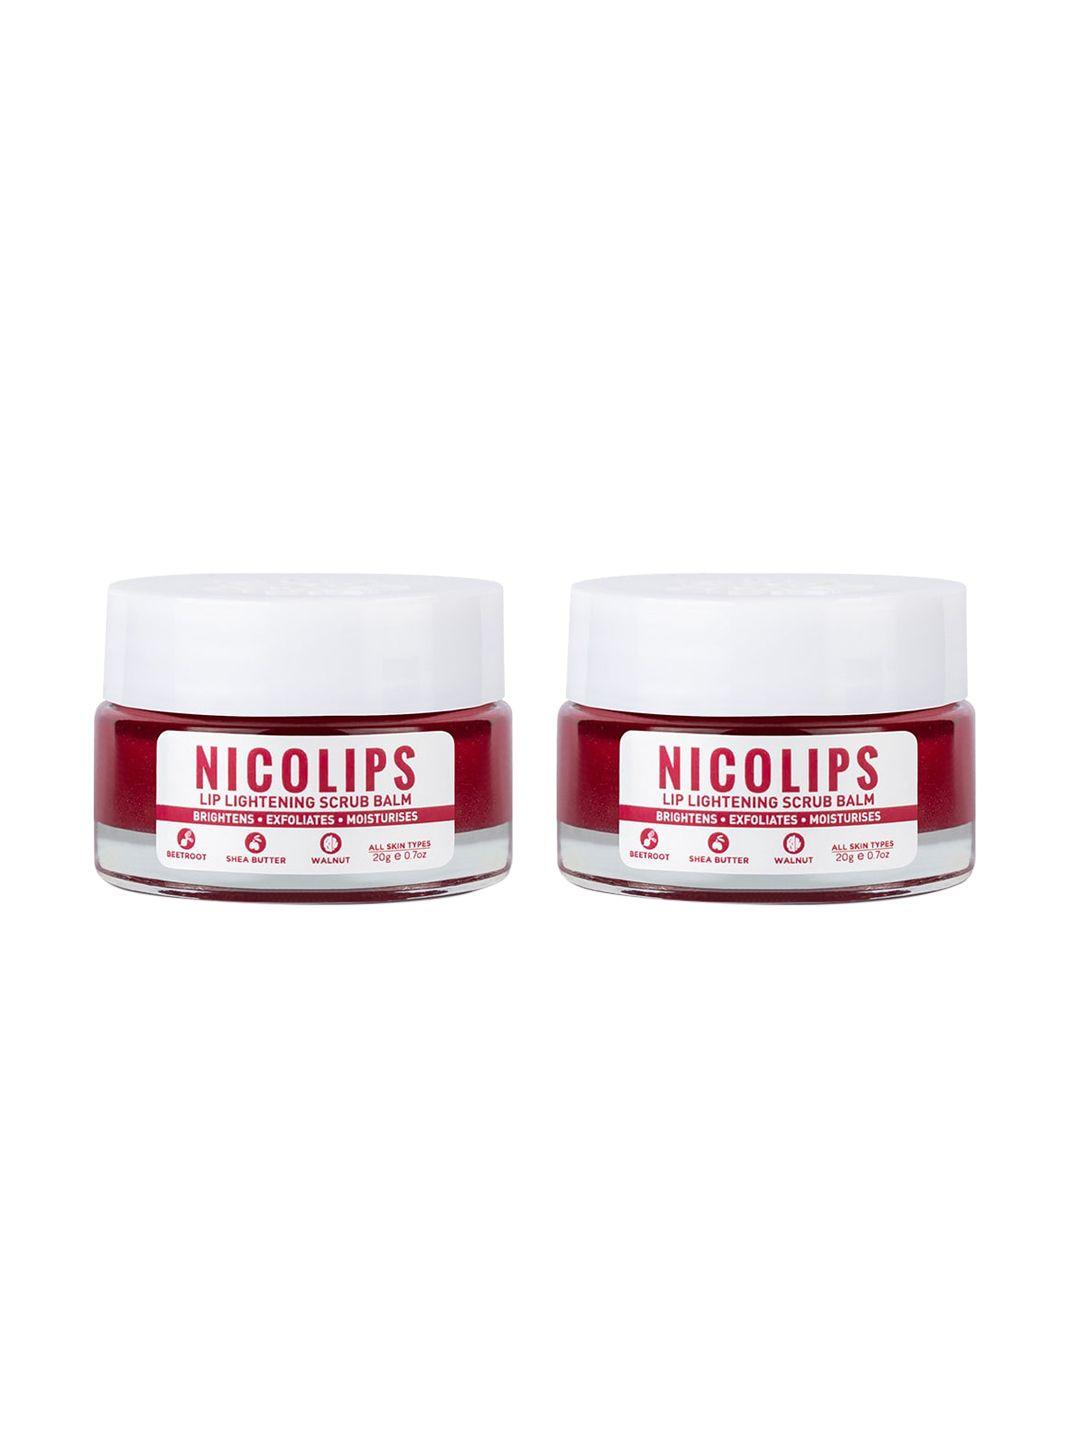 bella vita organic set of 2 nicolips lip brightening scrub balm with beetroot - 20g each